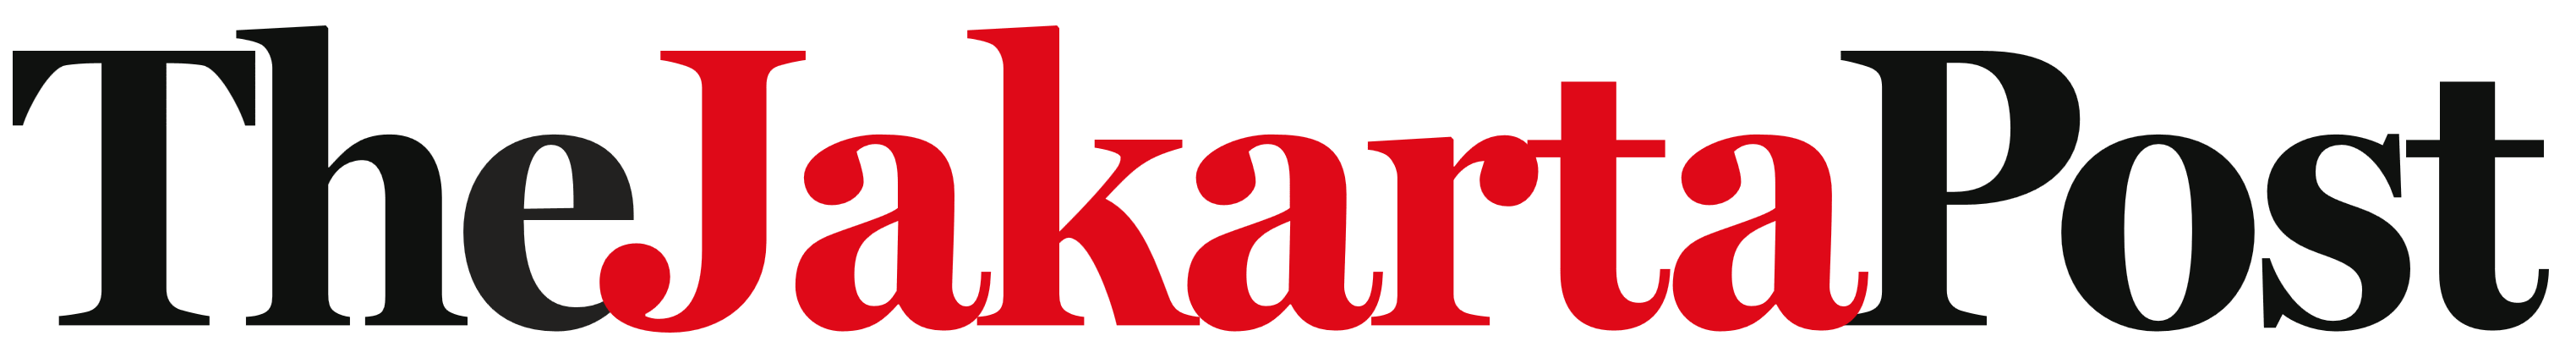 The Jakarta Post – Logos Download